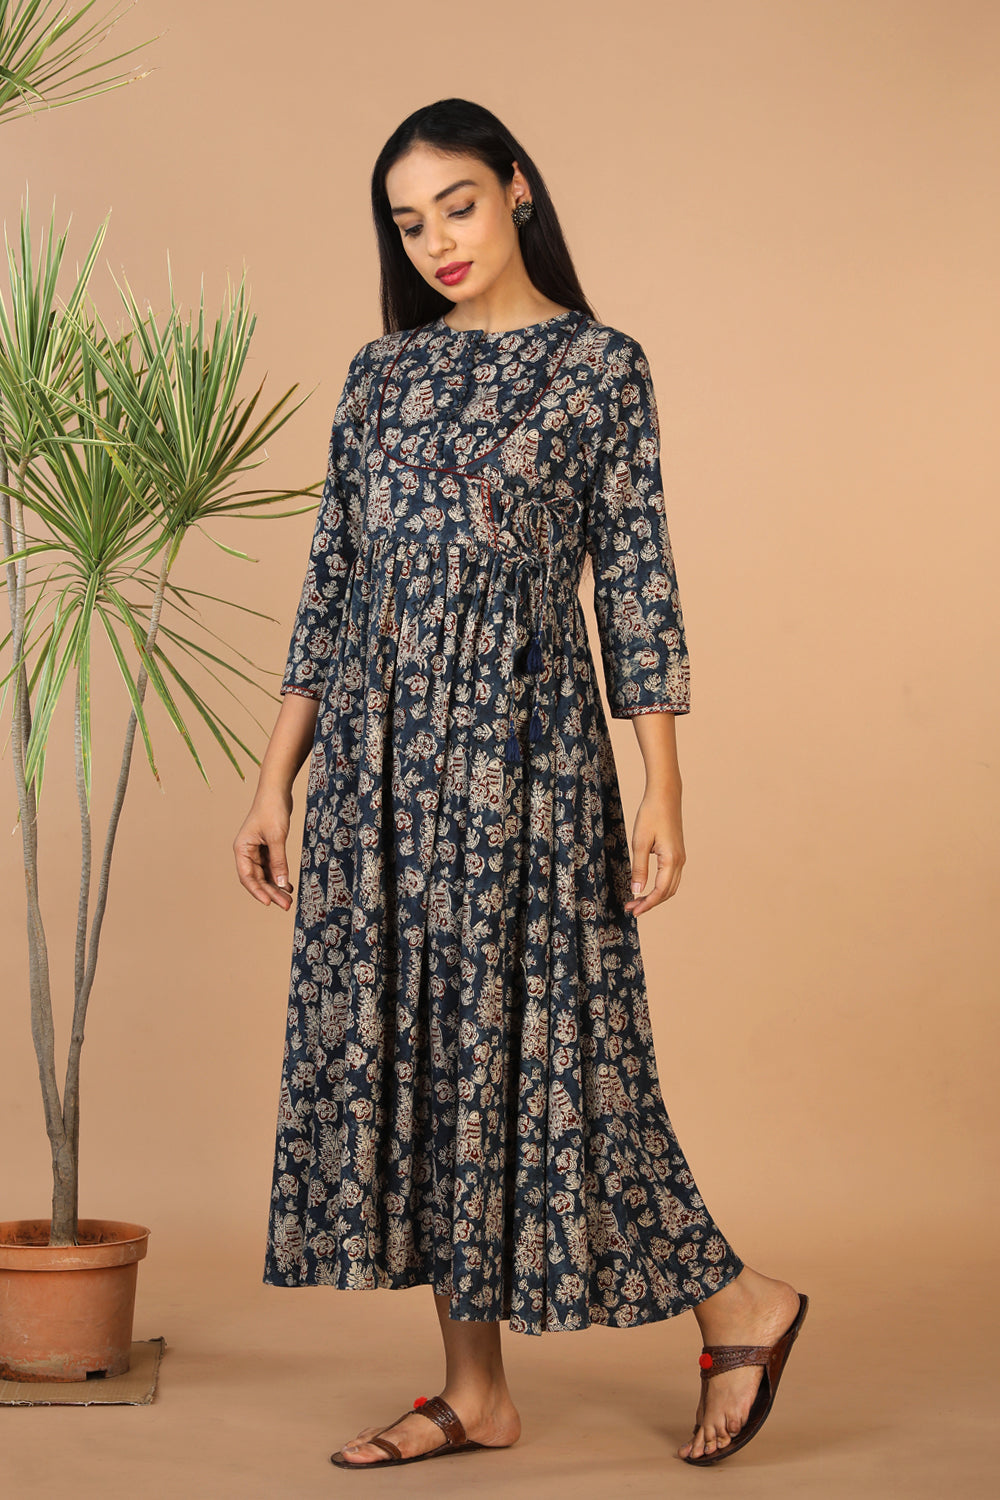 Indigo blue Kalamkari hand block printed long dress